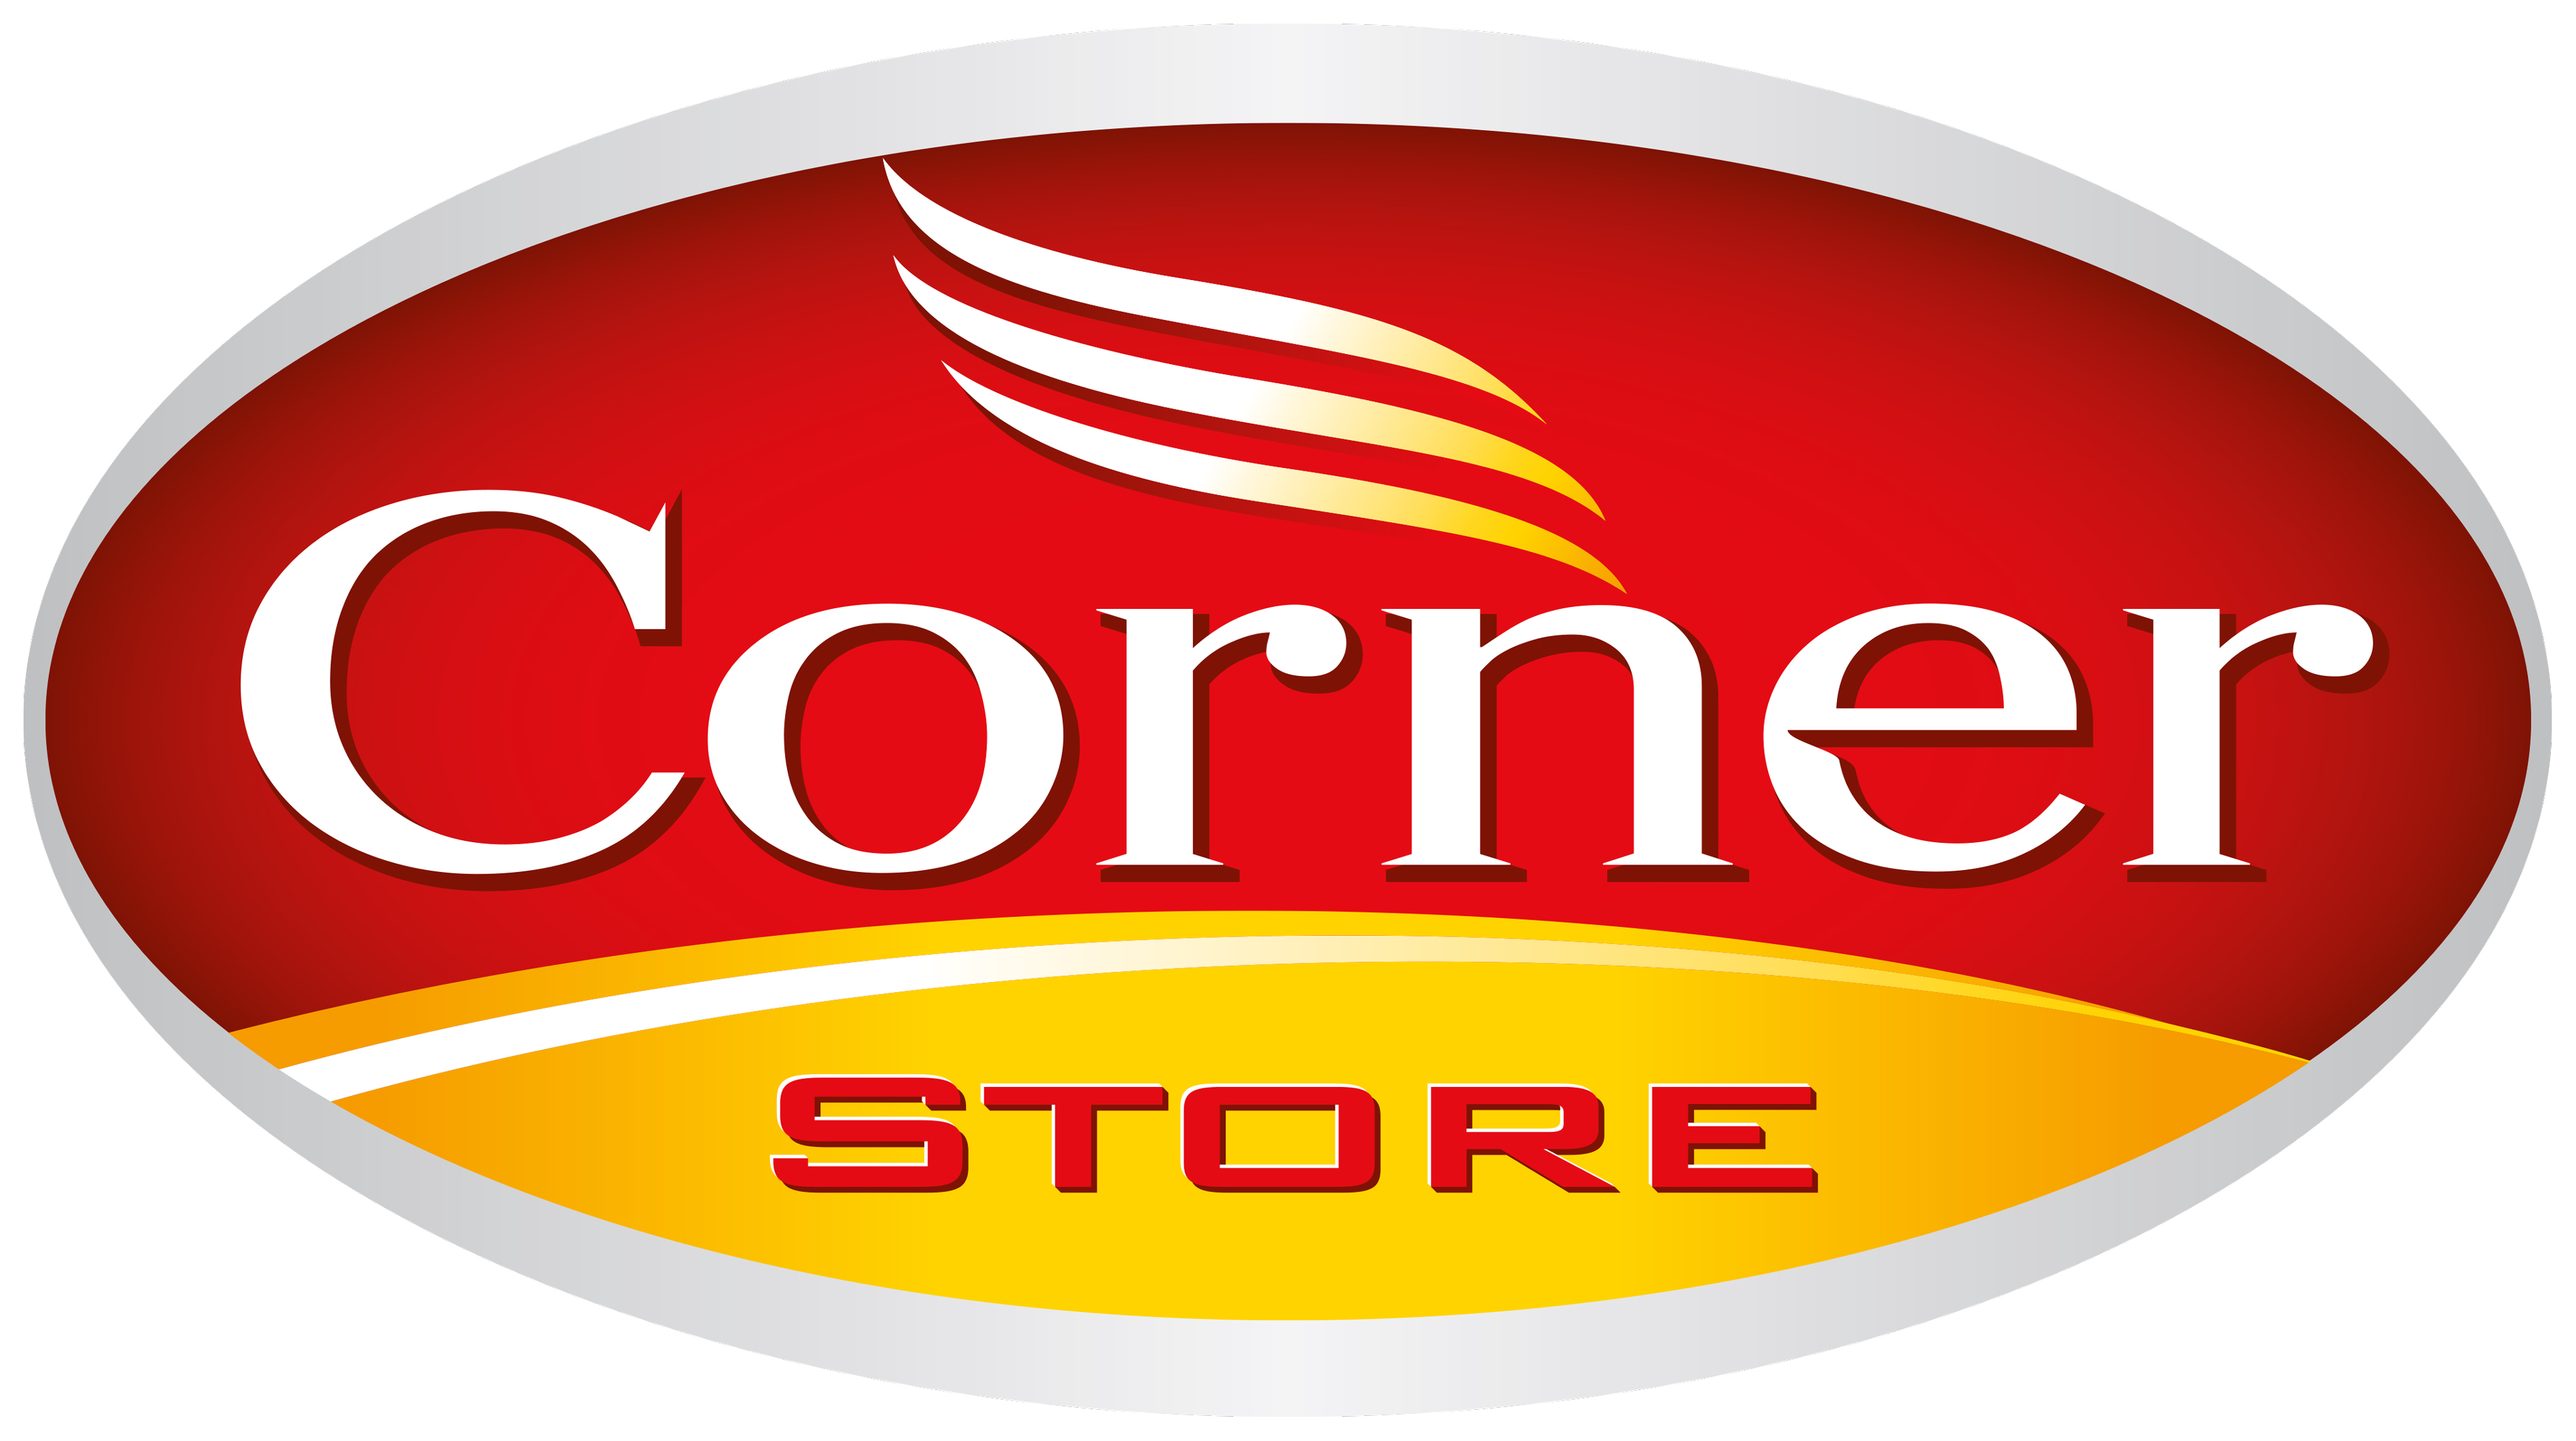  CornerStore